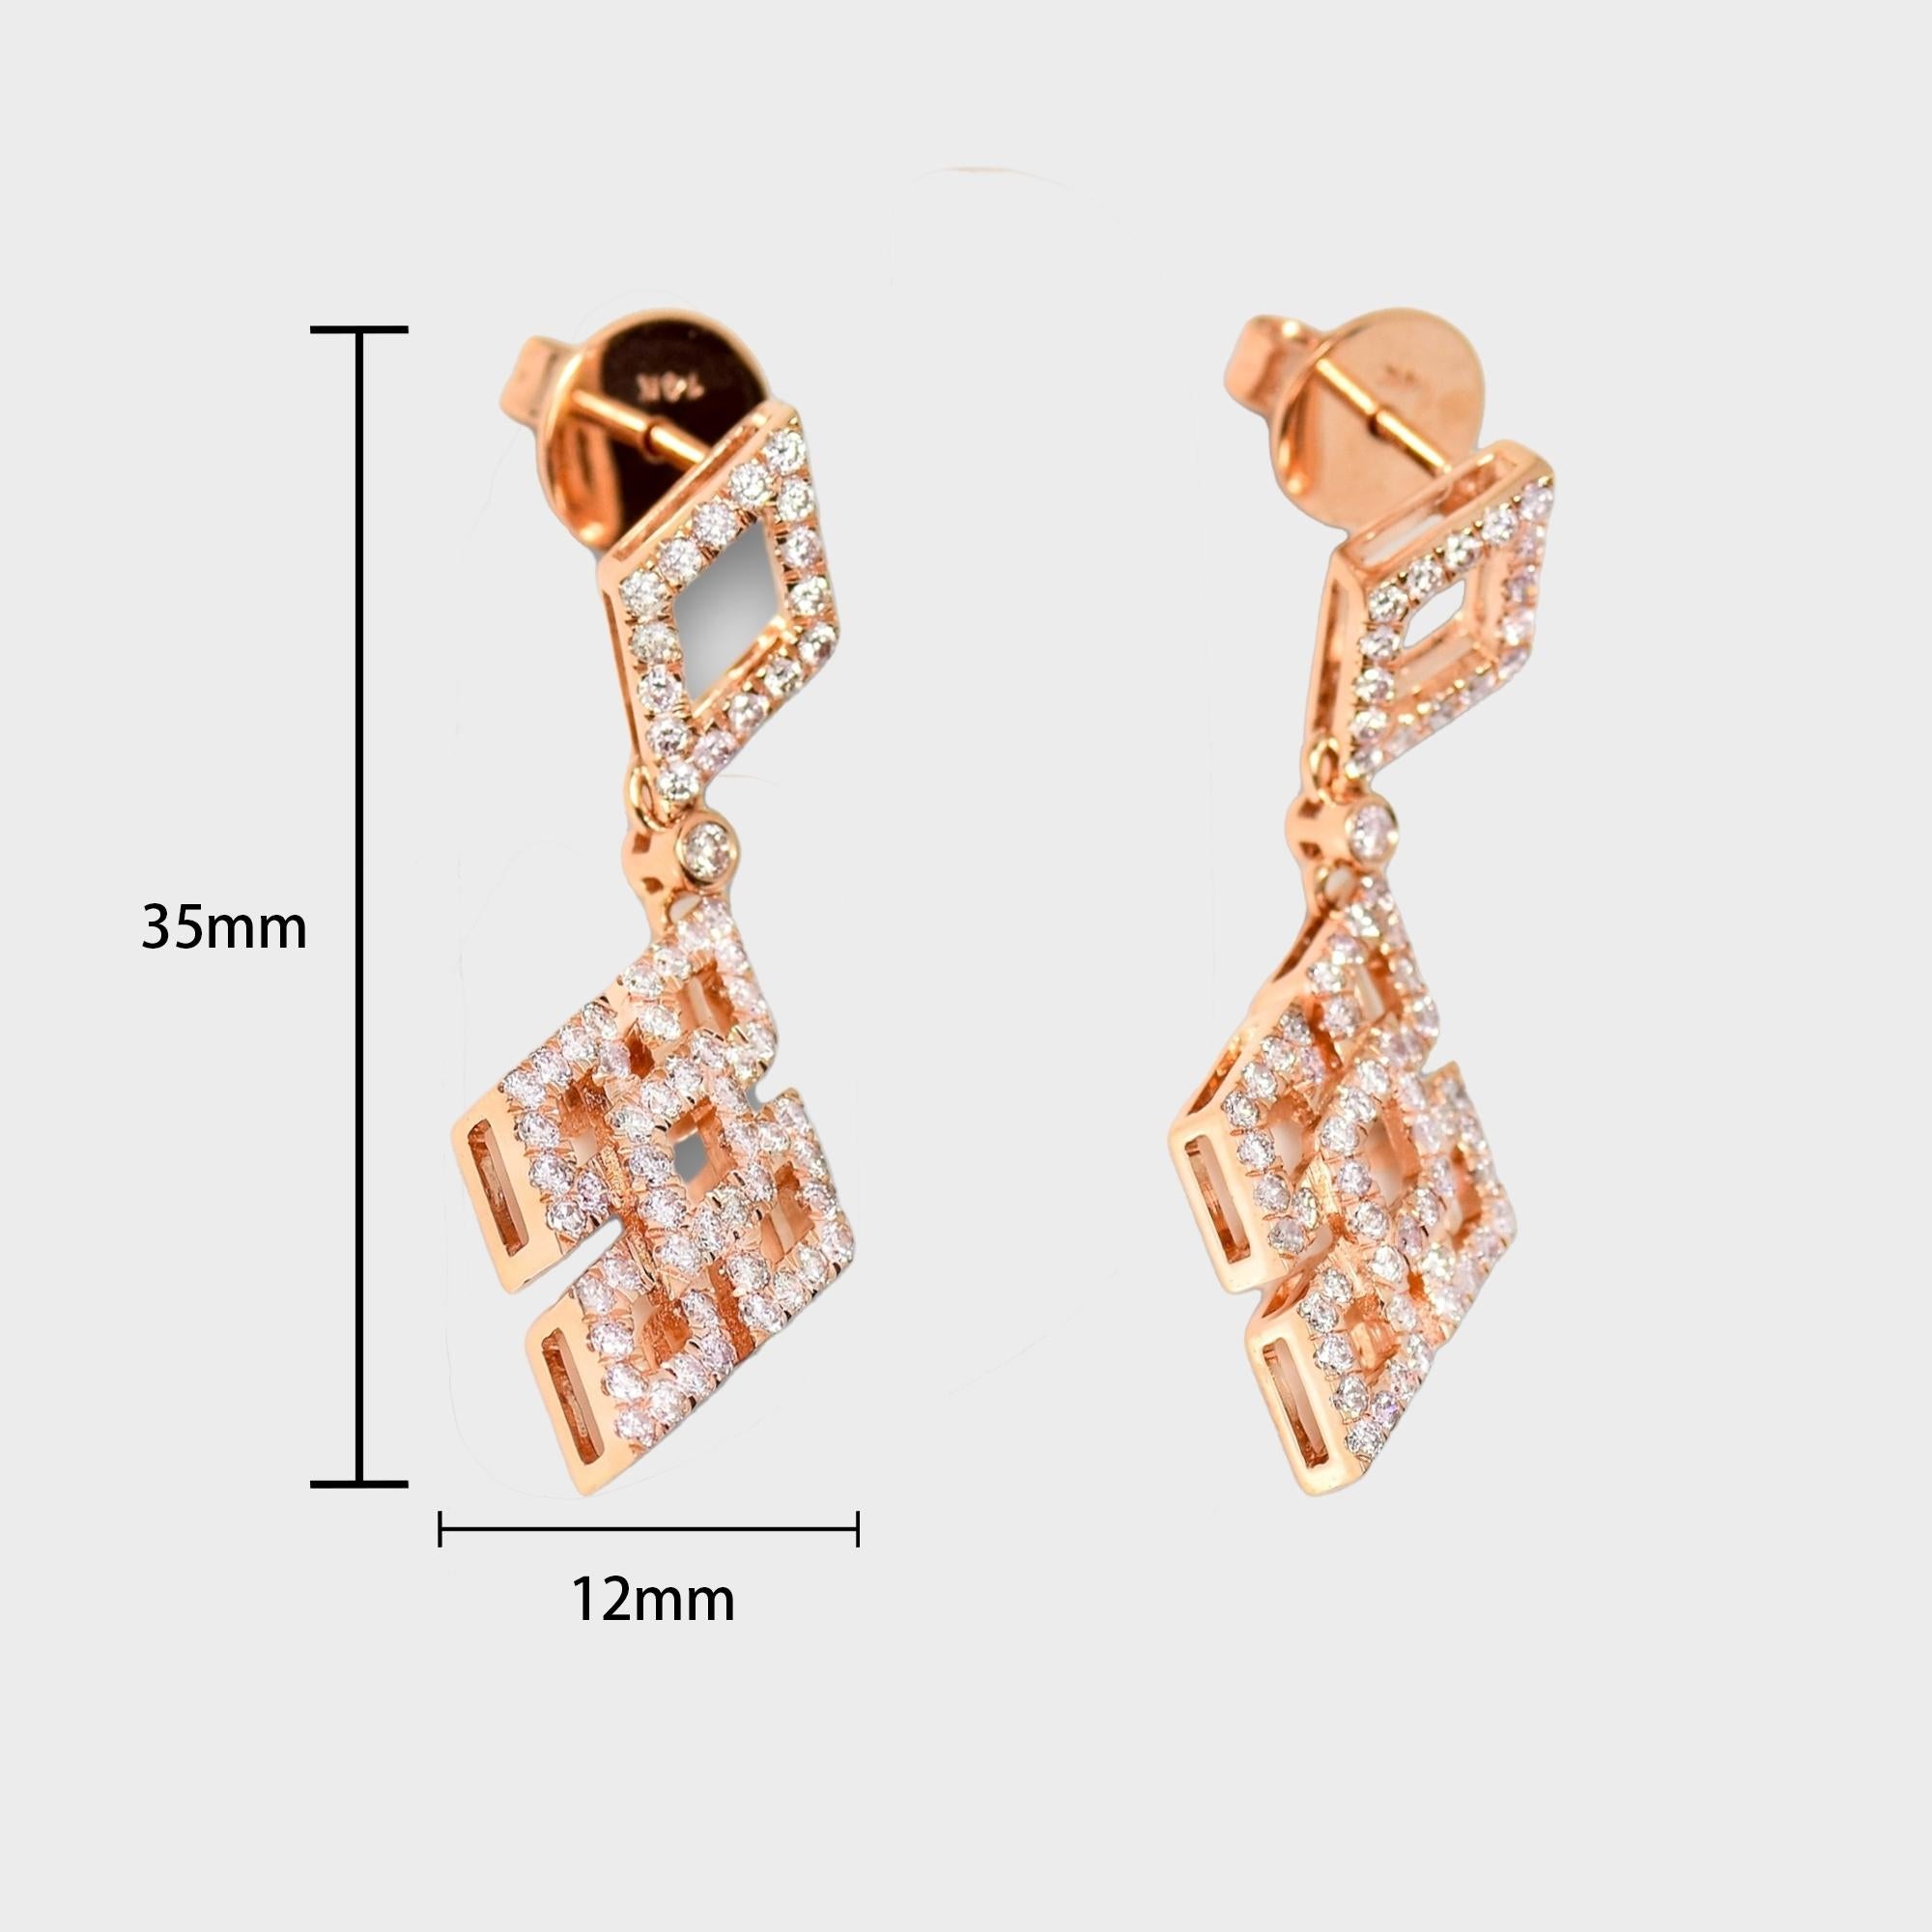 IGI 14K 0.95 ct Natural Pink Diamonds Art Deco Design Stud Earrings For Sale 3